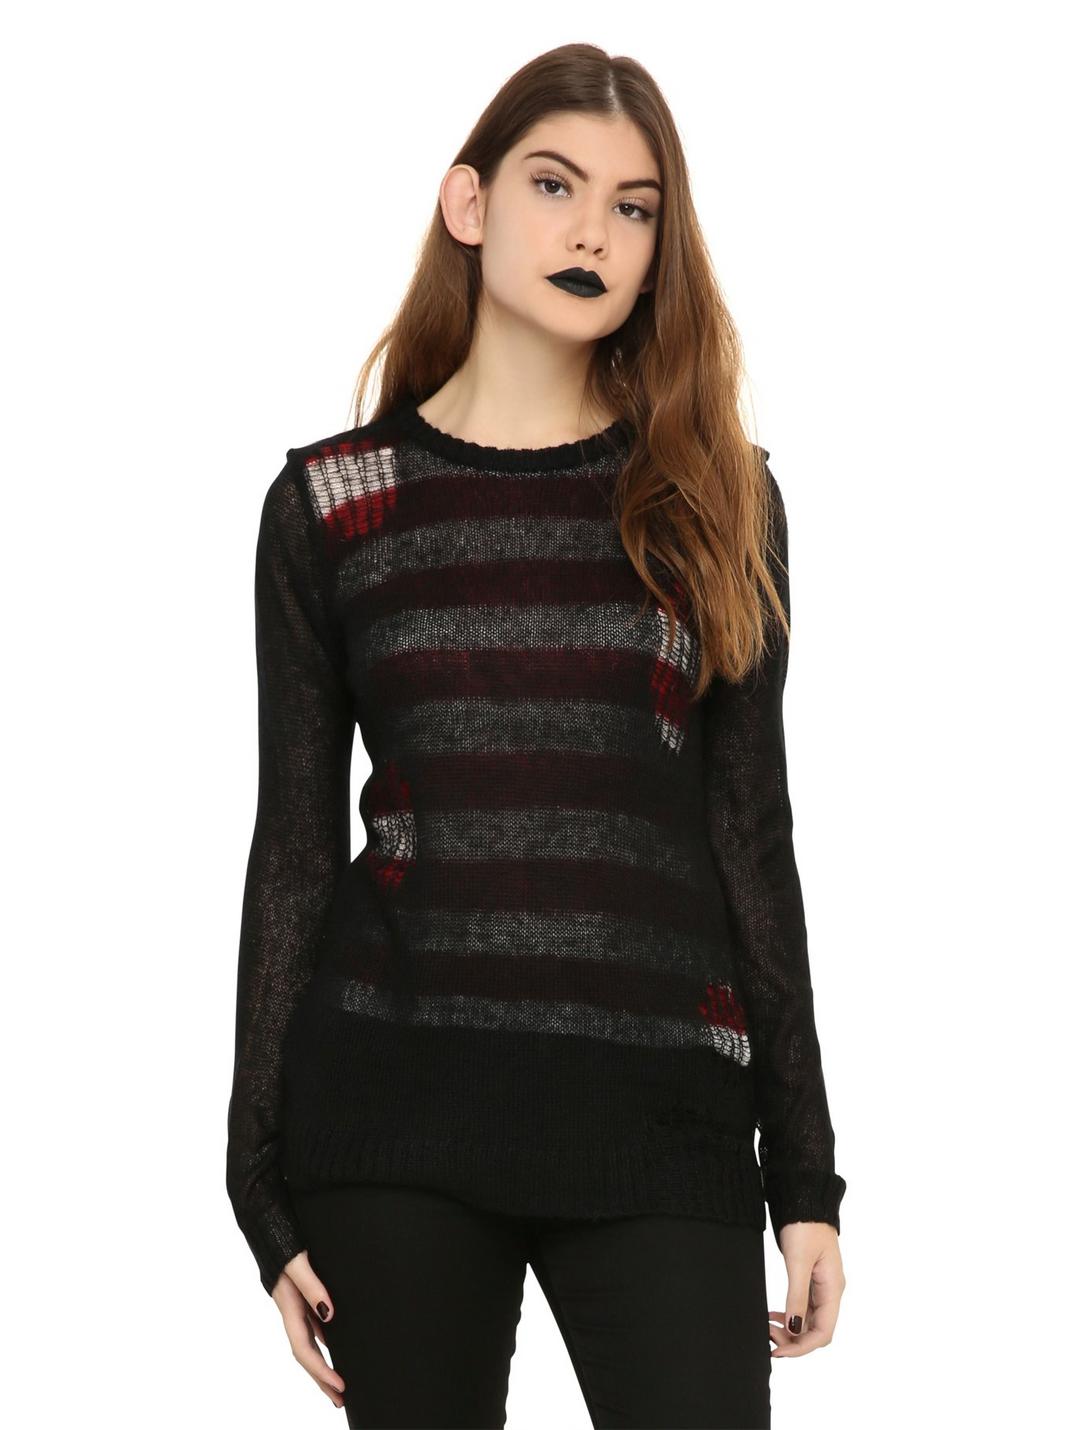 Royal Bones By Tripp Black White & Red Striped Reversible Sweater, BLACK, hi-res